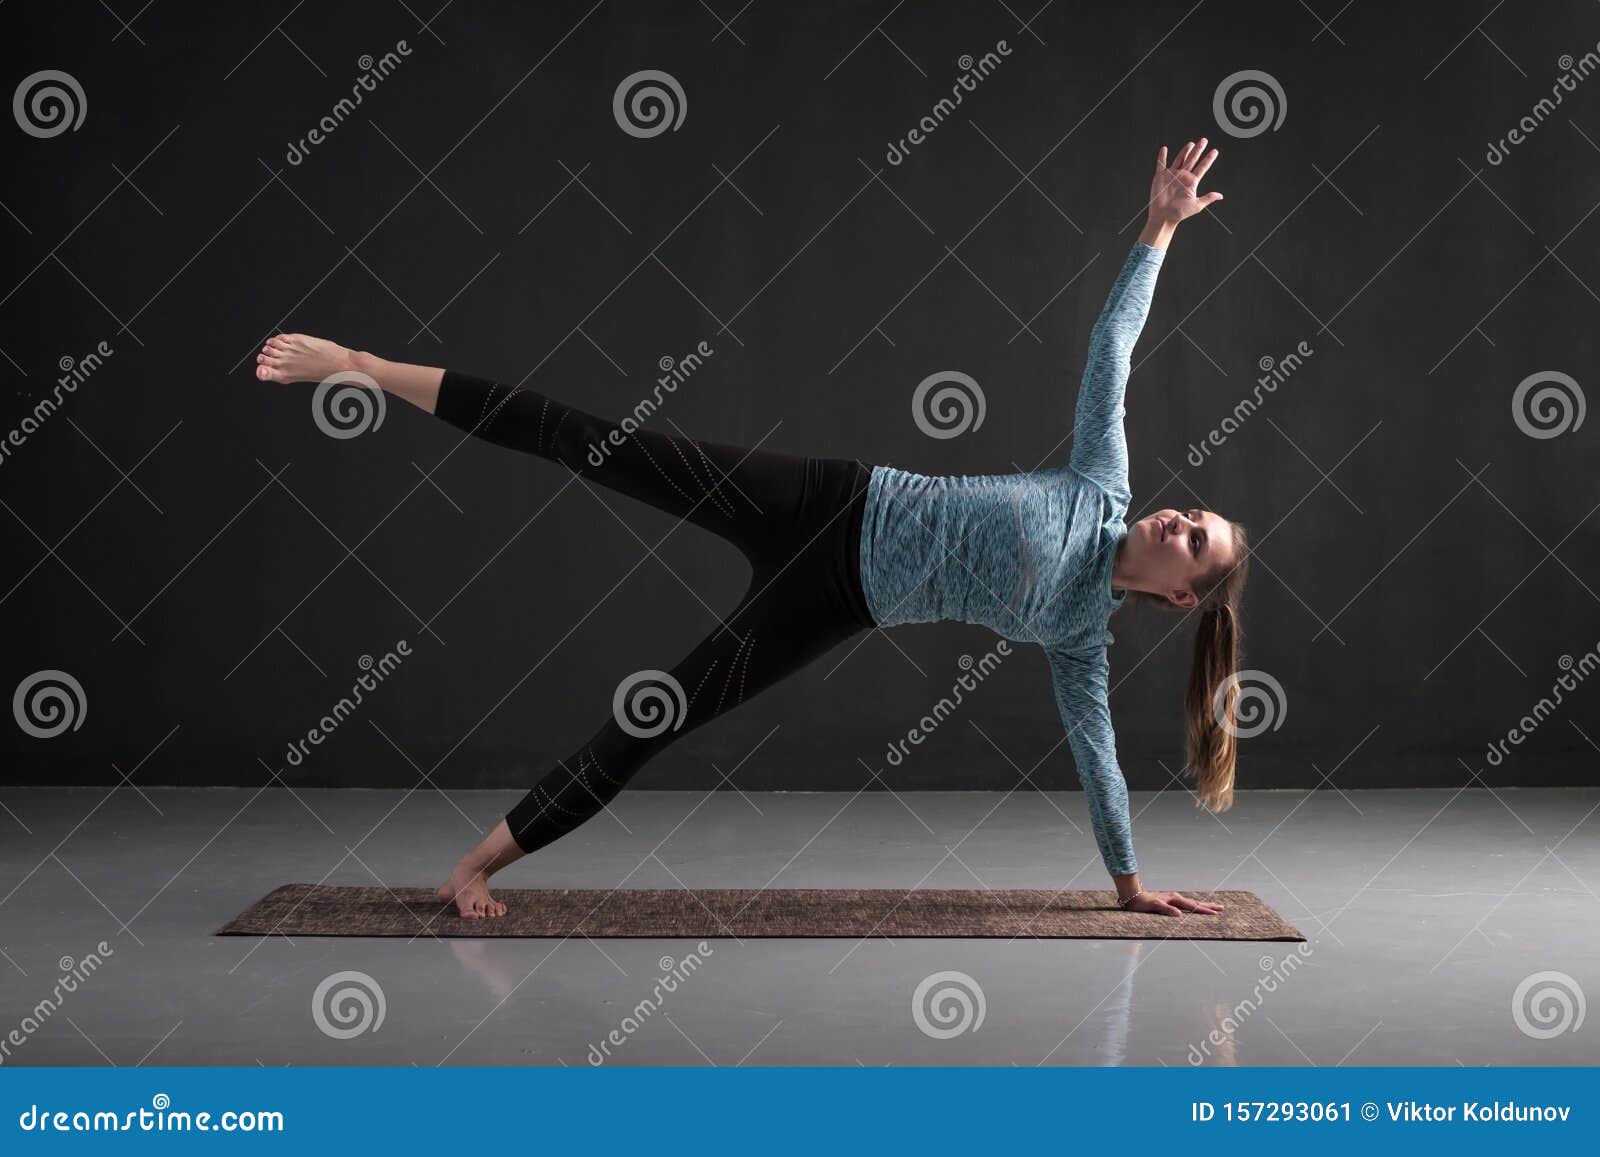 Vasisthasana: Side Plank Pose with Tree Pose Leg Variation